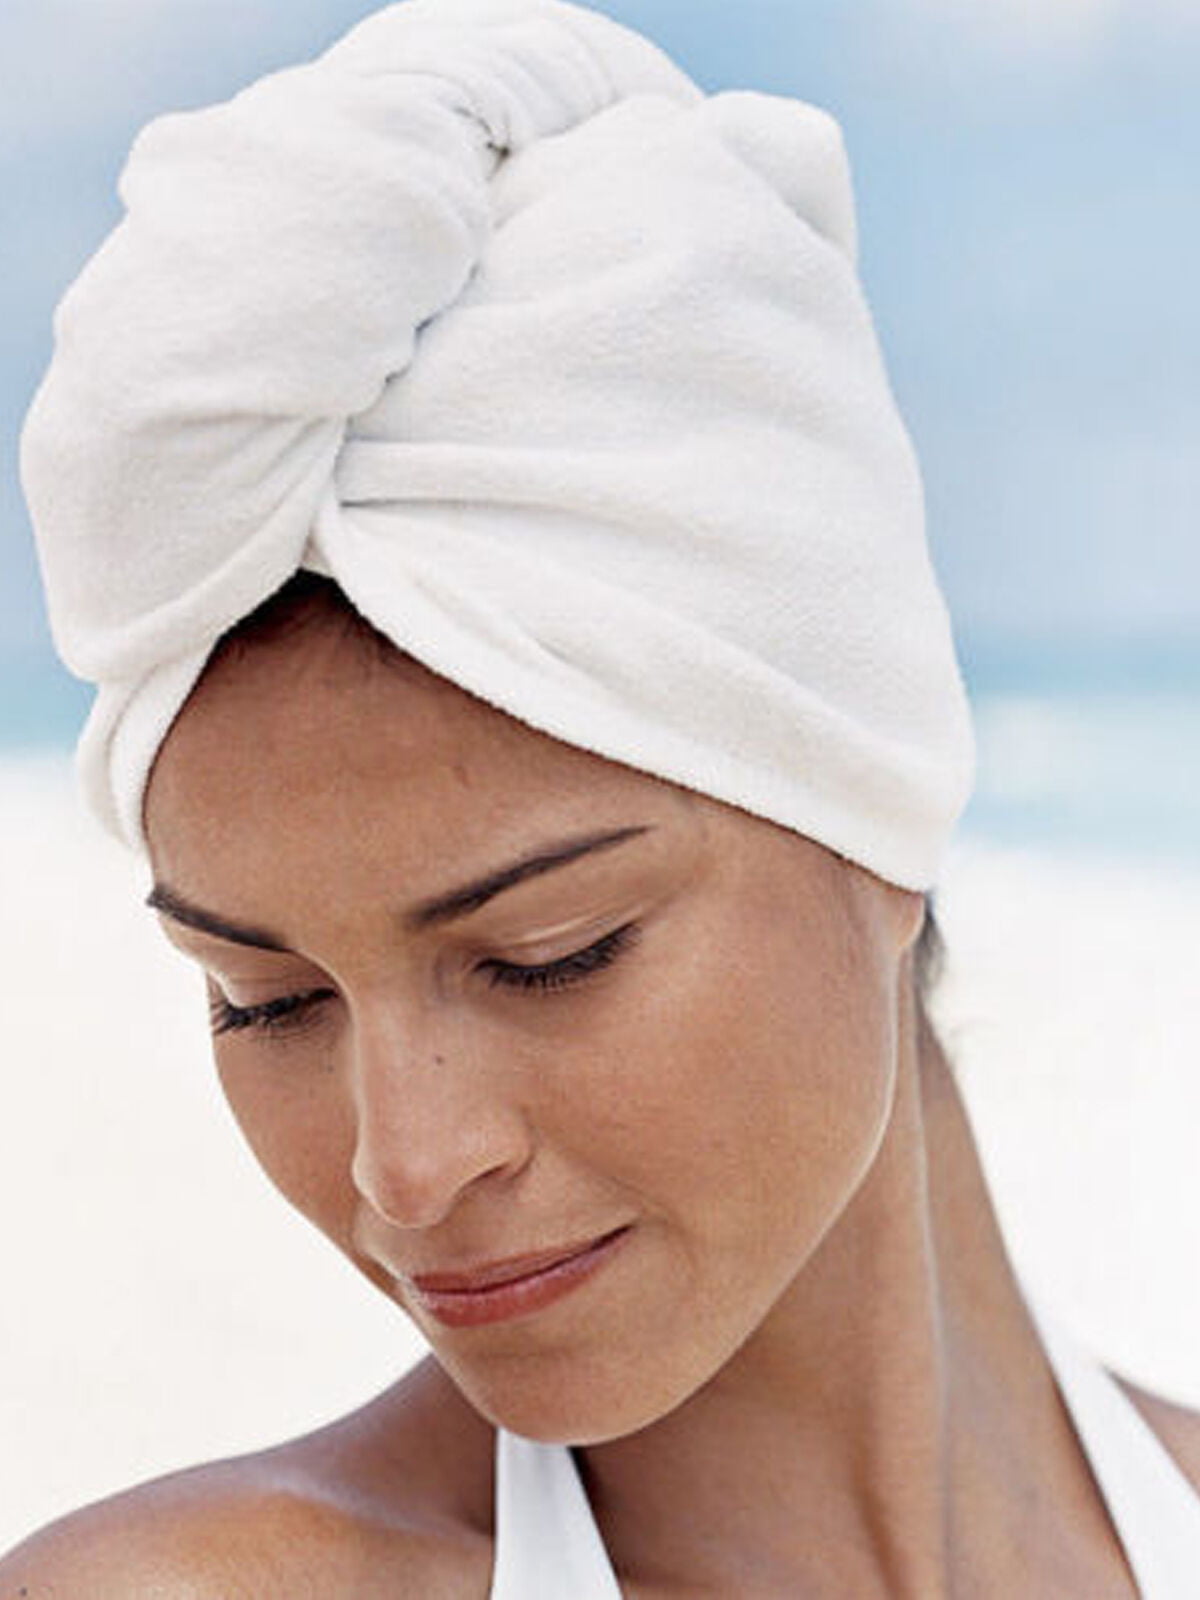 Hair Magic Quick Dry Microfiber Towel Drying Turban Wrap Hat Cap Spa Bath Tool J 